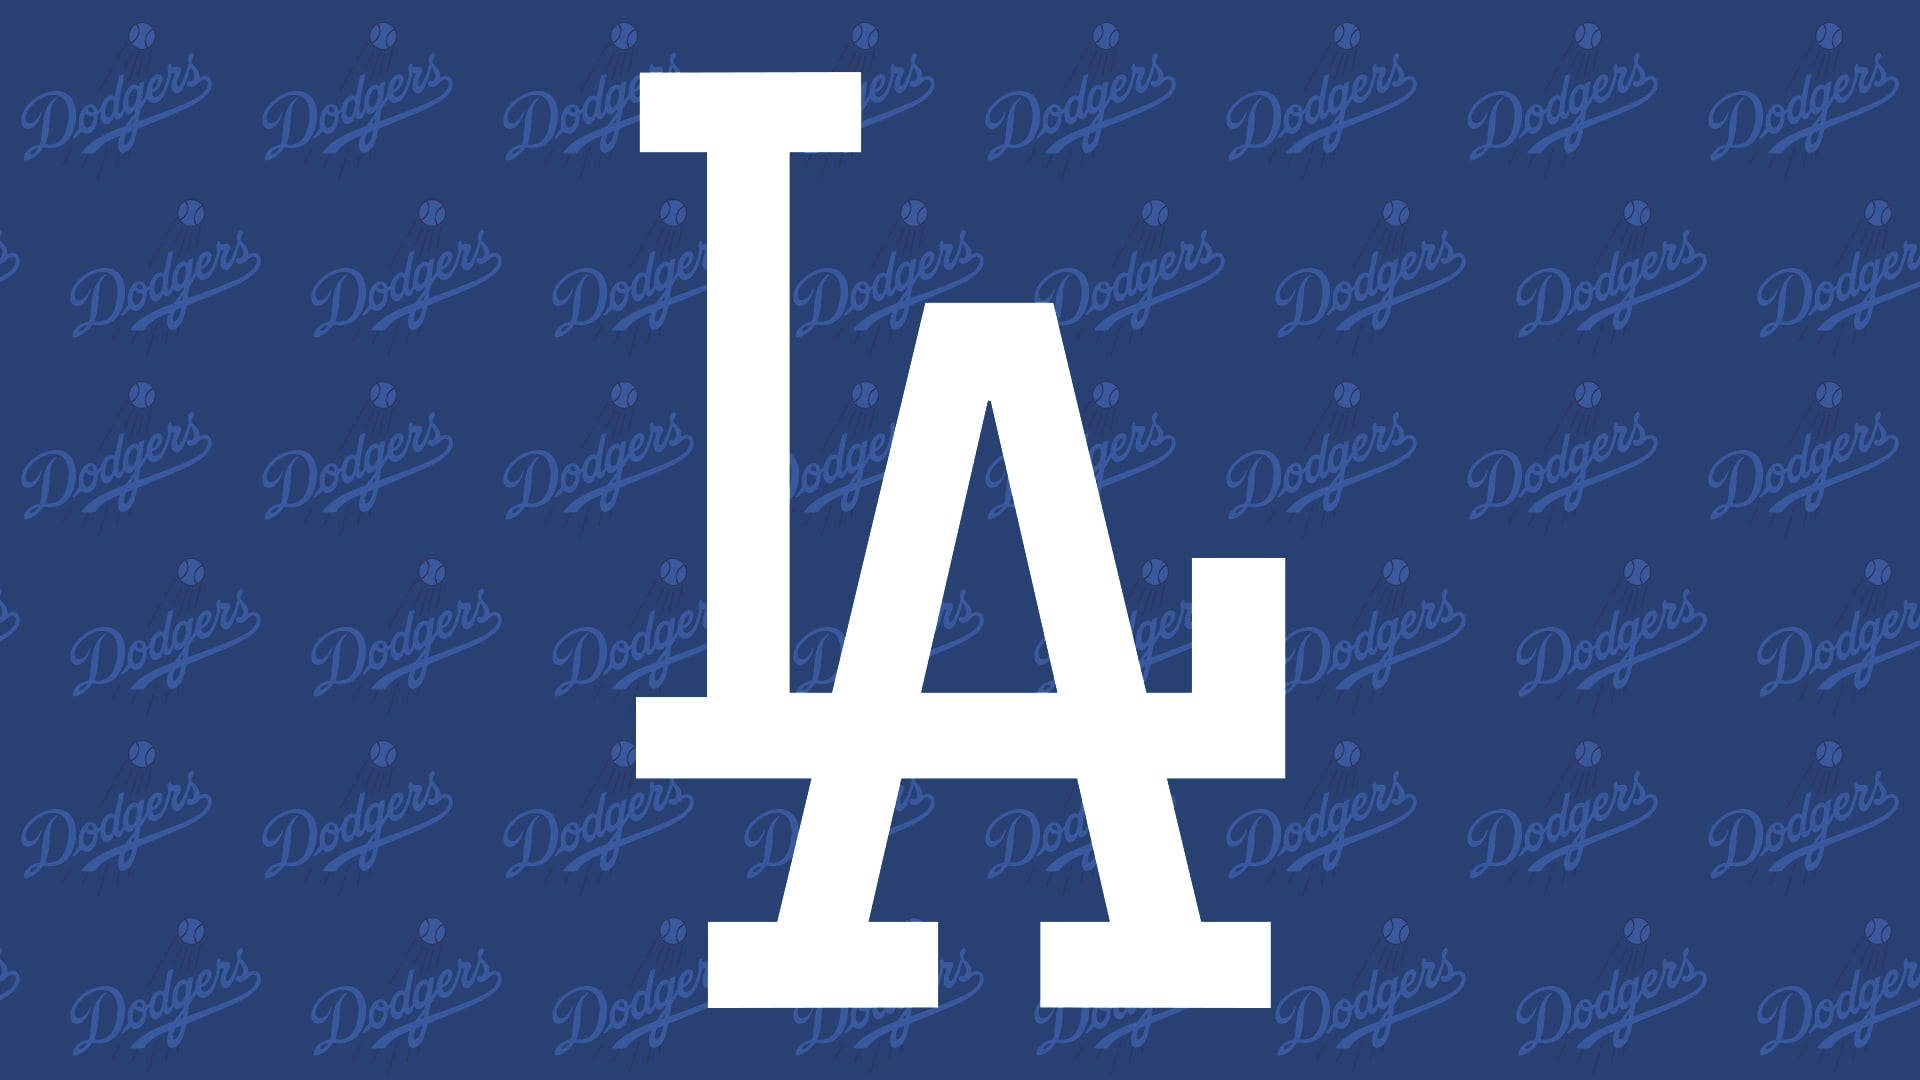 Los Angeles Dodgers Patterned Backdrop Background